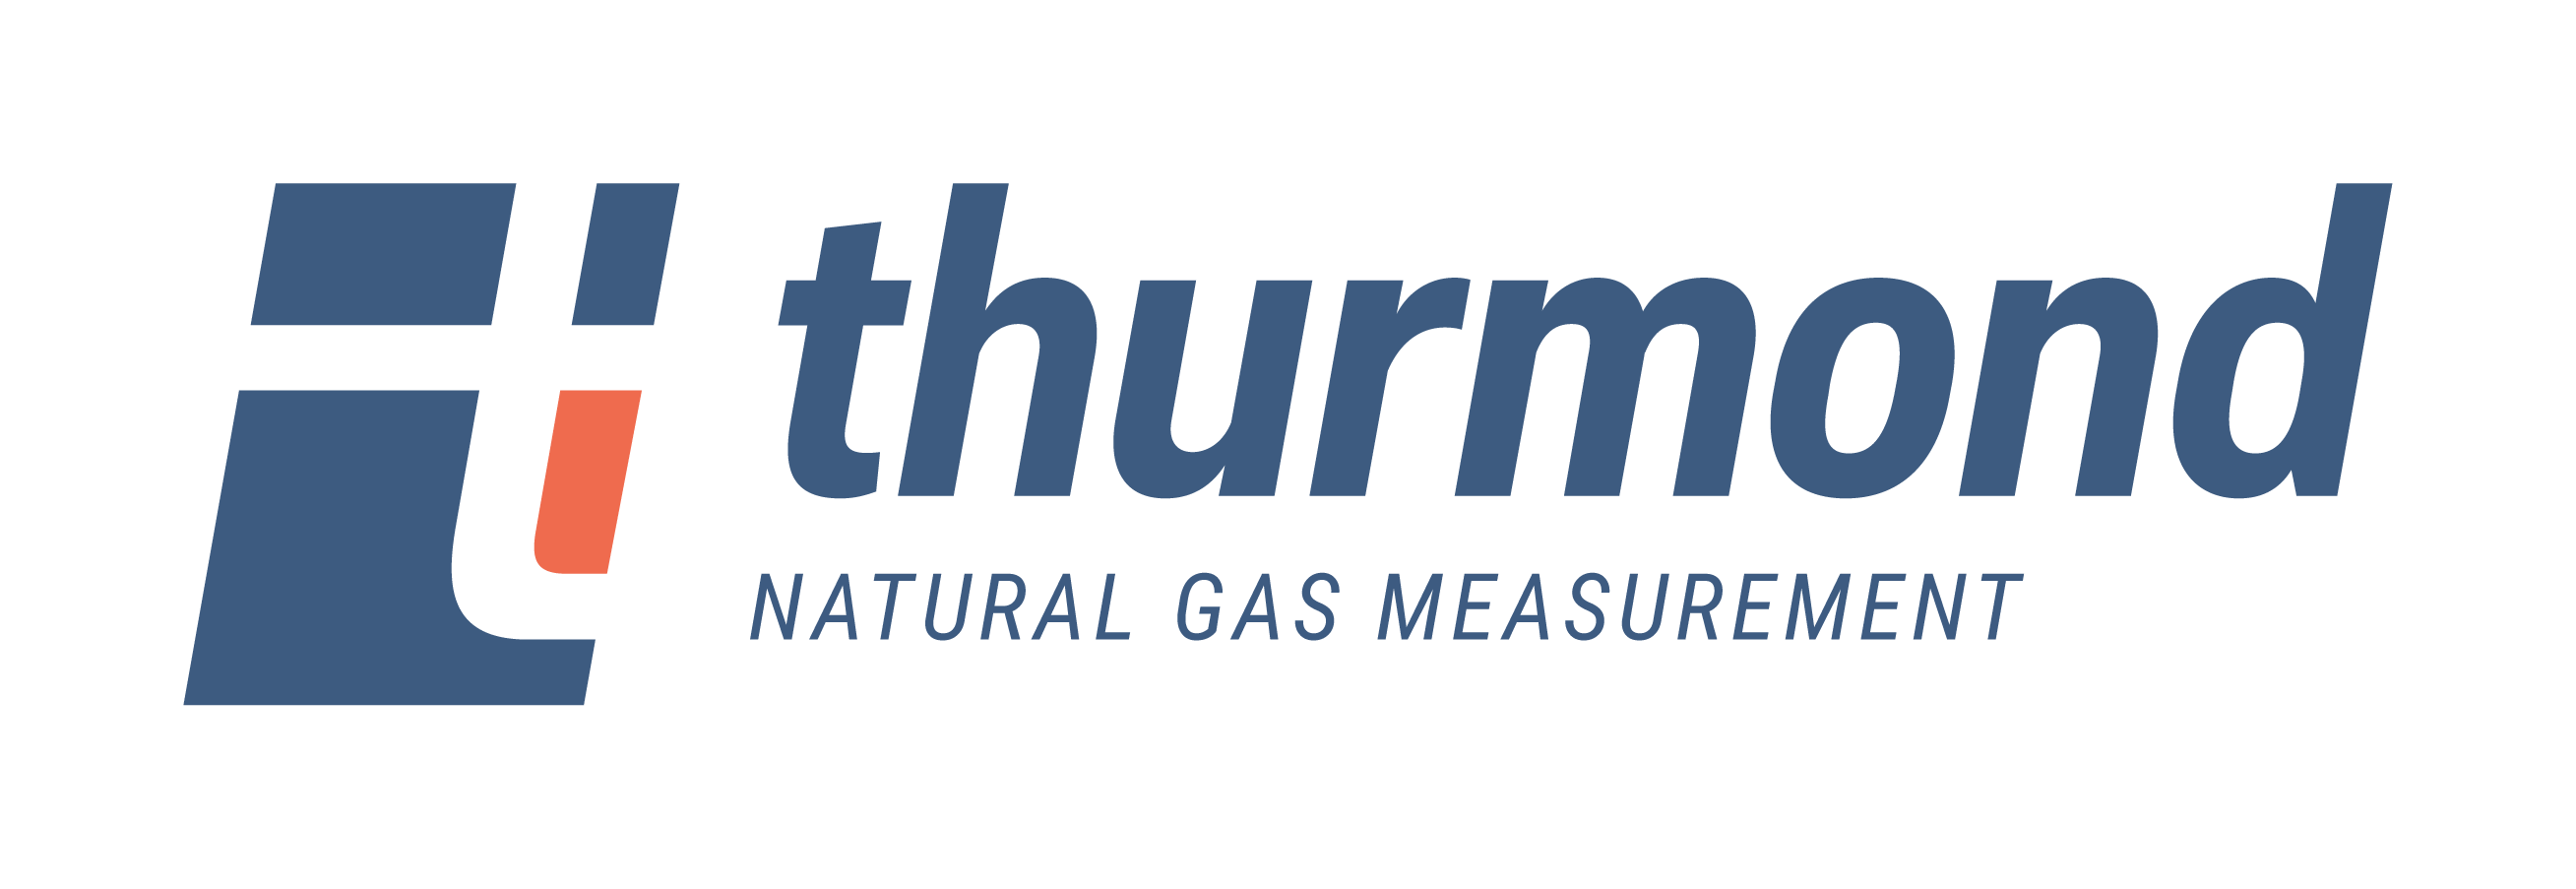 Thurmond Natural Gas Measurement Logo